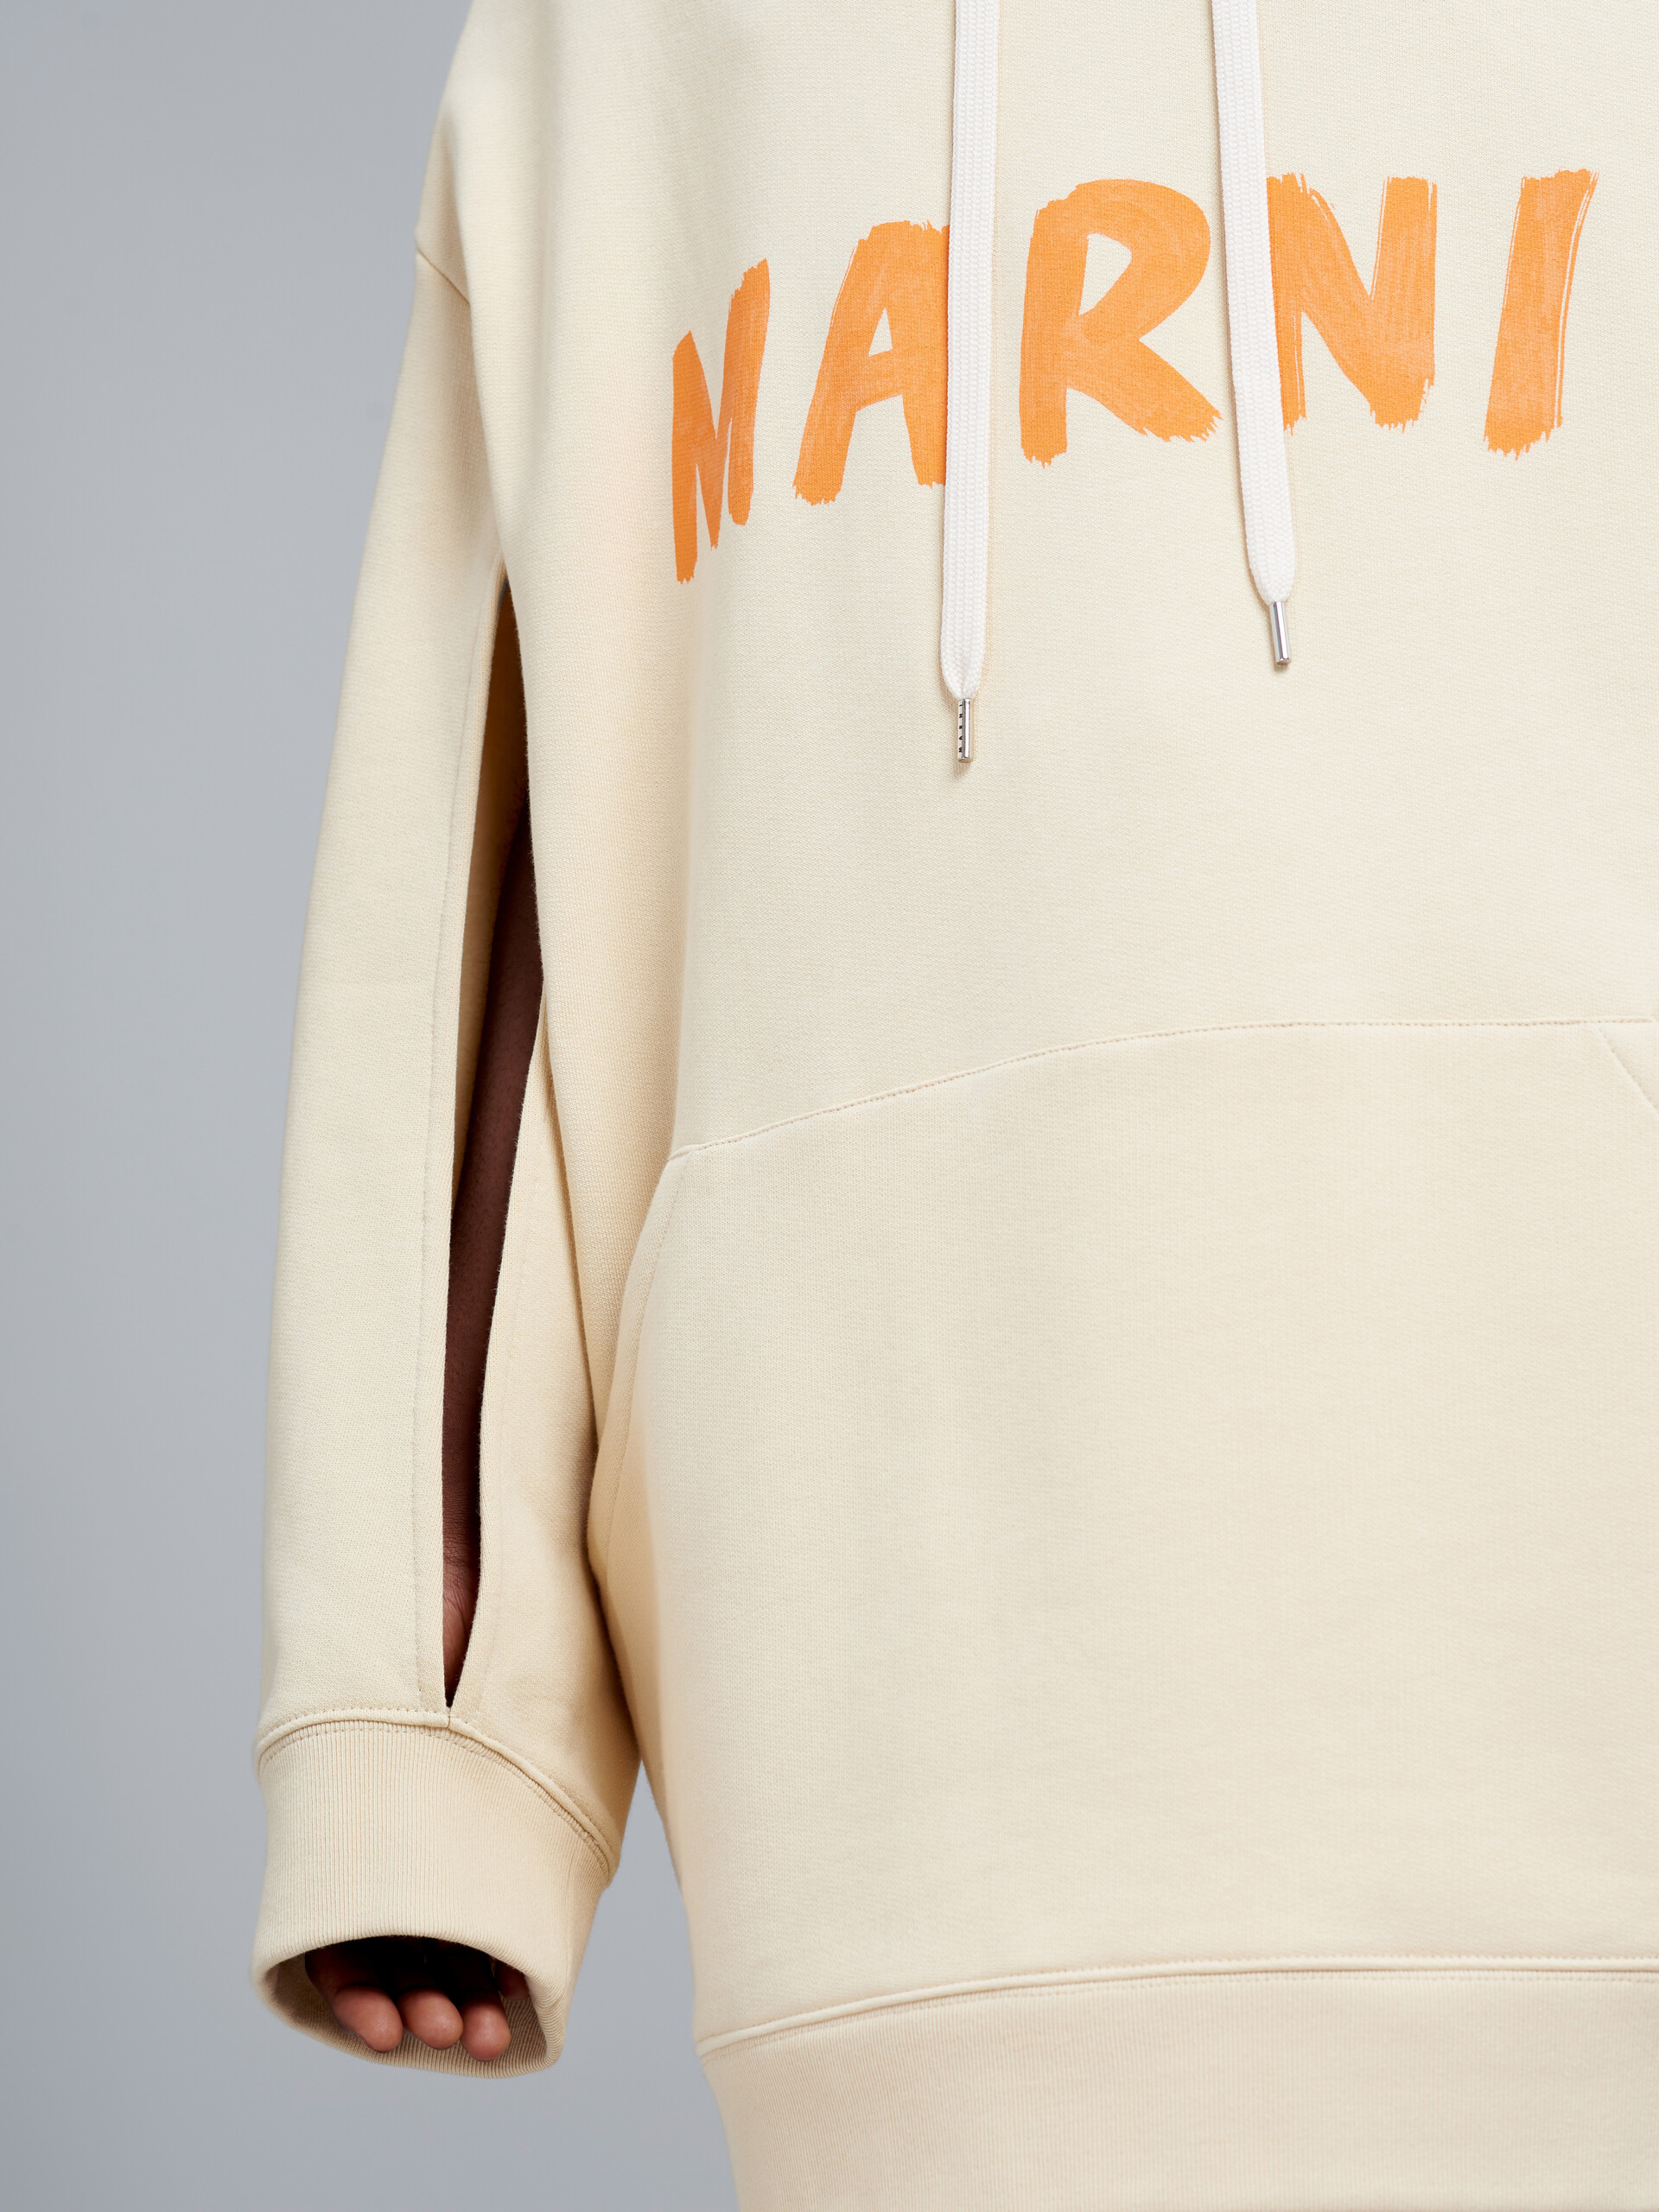 Marni lettering organic cotton sweatshirt - Pullovers - Image 4